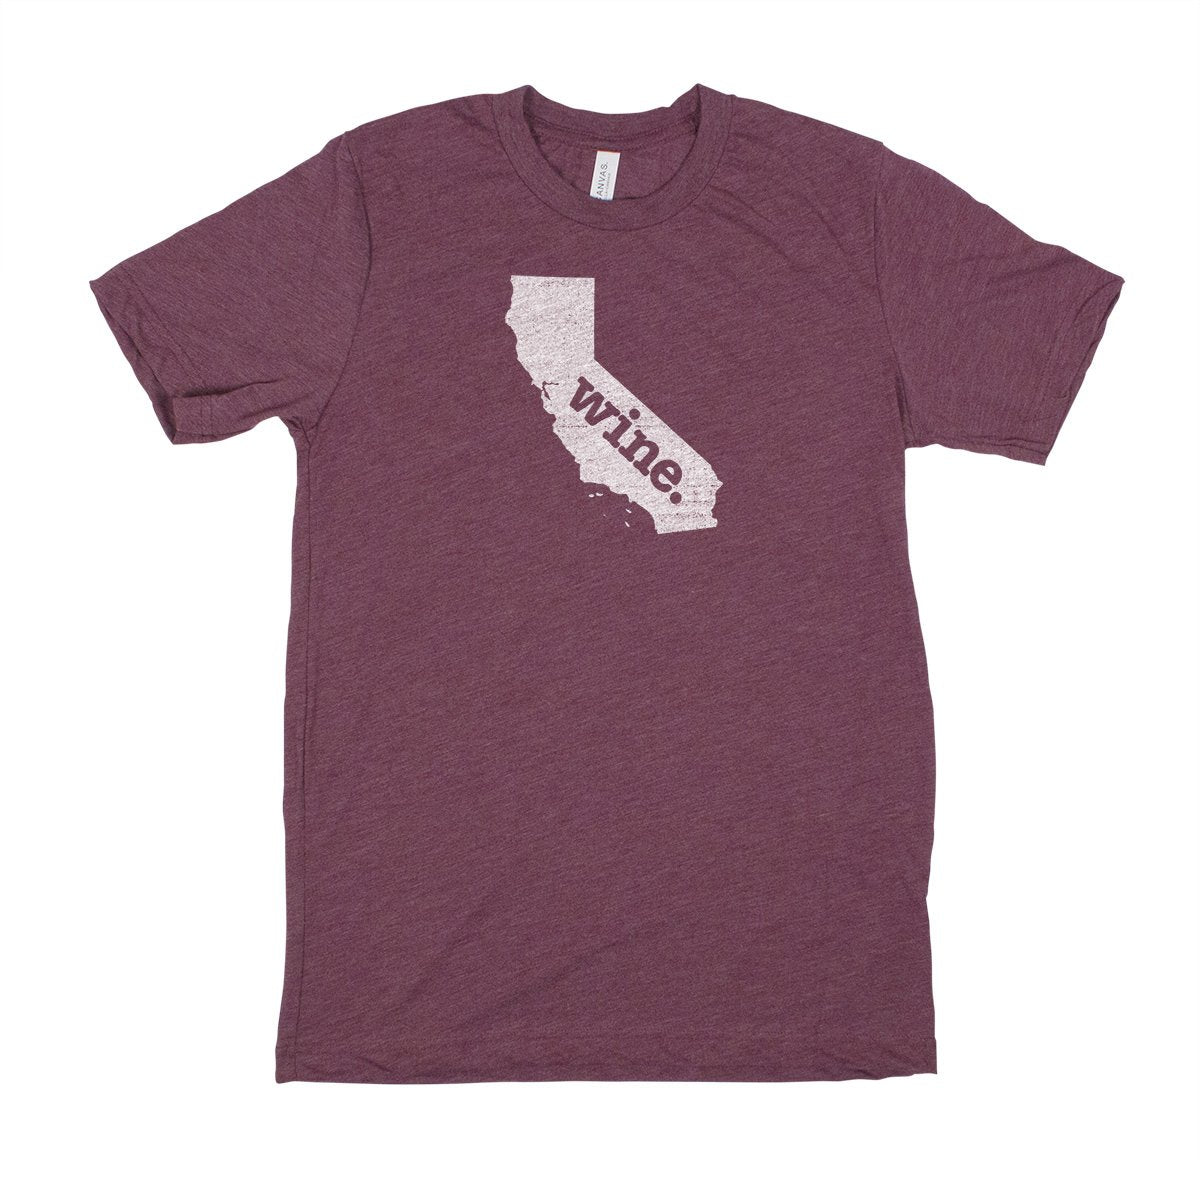 run. Men's Unisex T-Shirt - Oregon